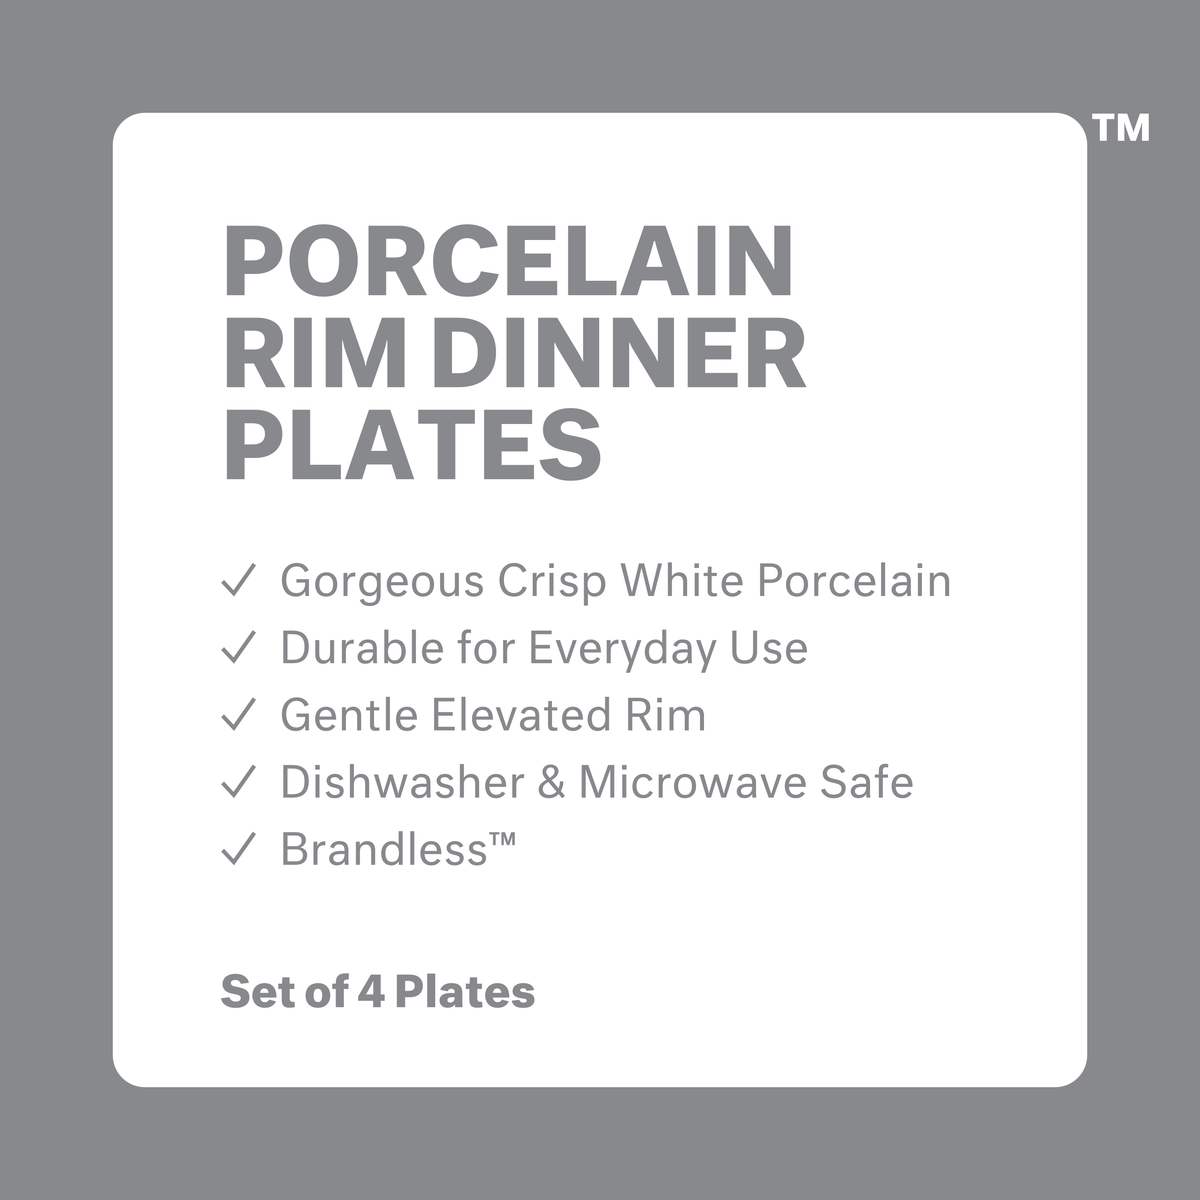 Porcelain rim dinner plates: gorgeous crisp white porcelain, durable for everyday use, gentle elevated rim, dishwasher and microwave safe, Brandless. Set of 4 plates.